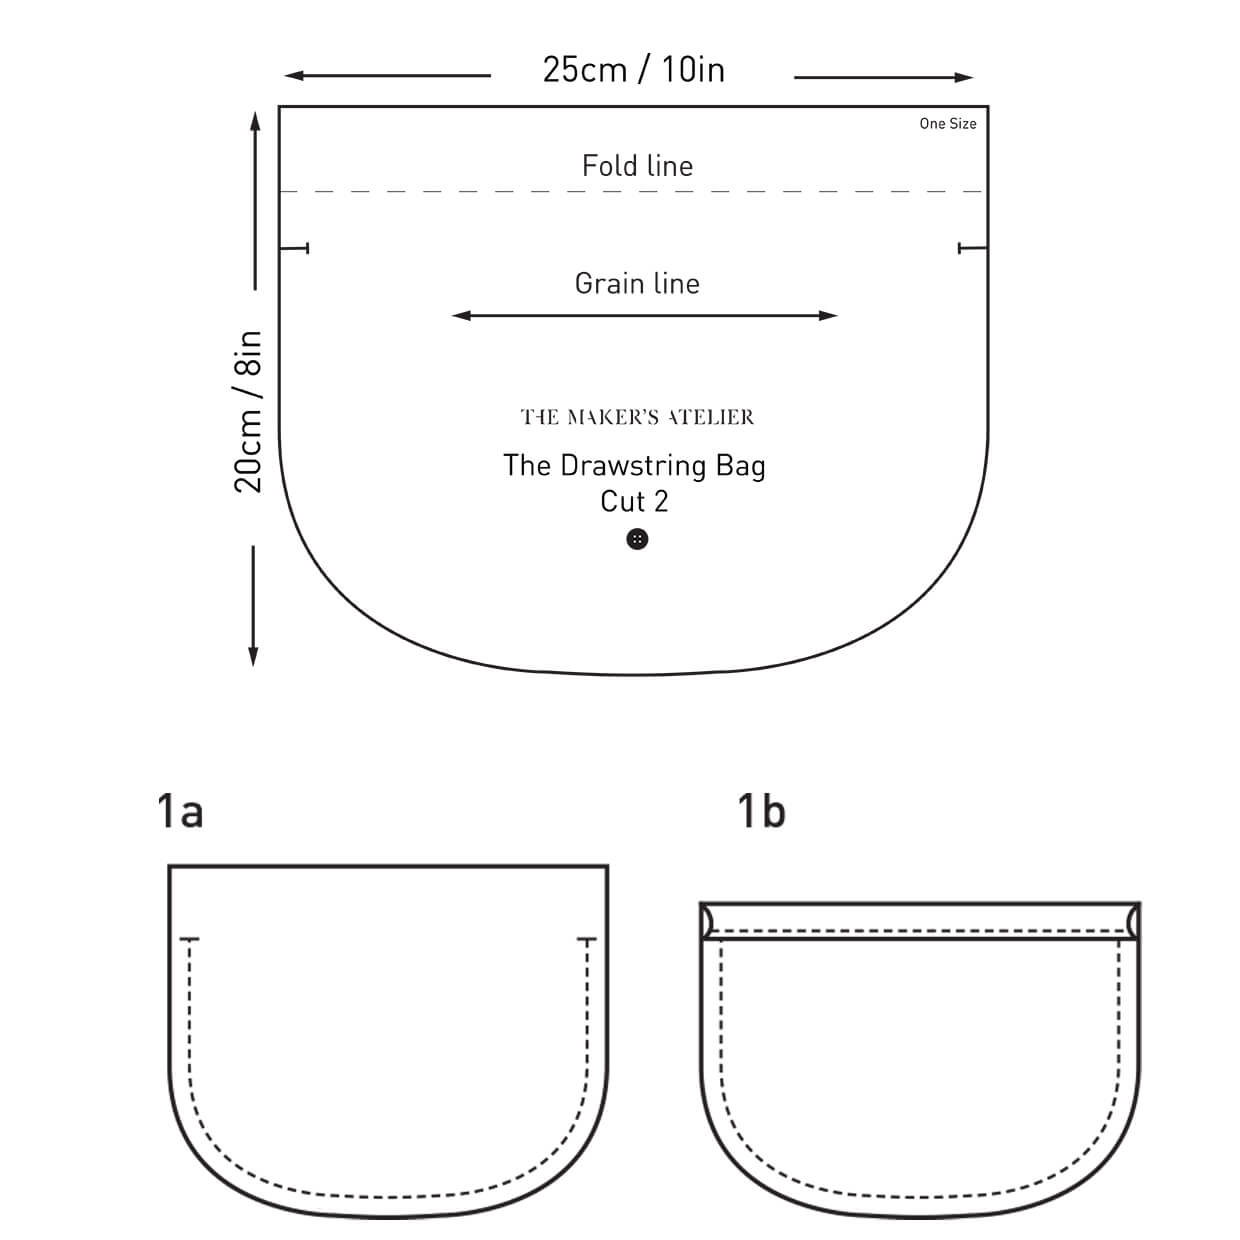 A simple drawstring bag